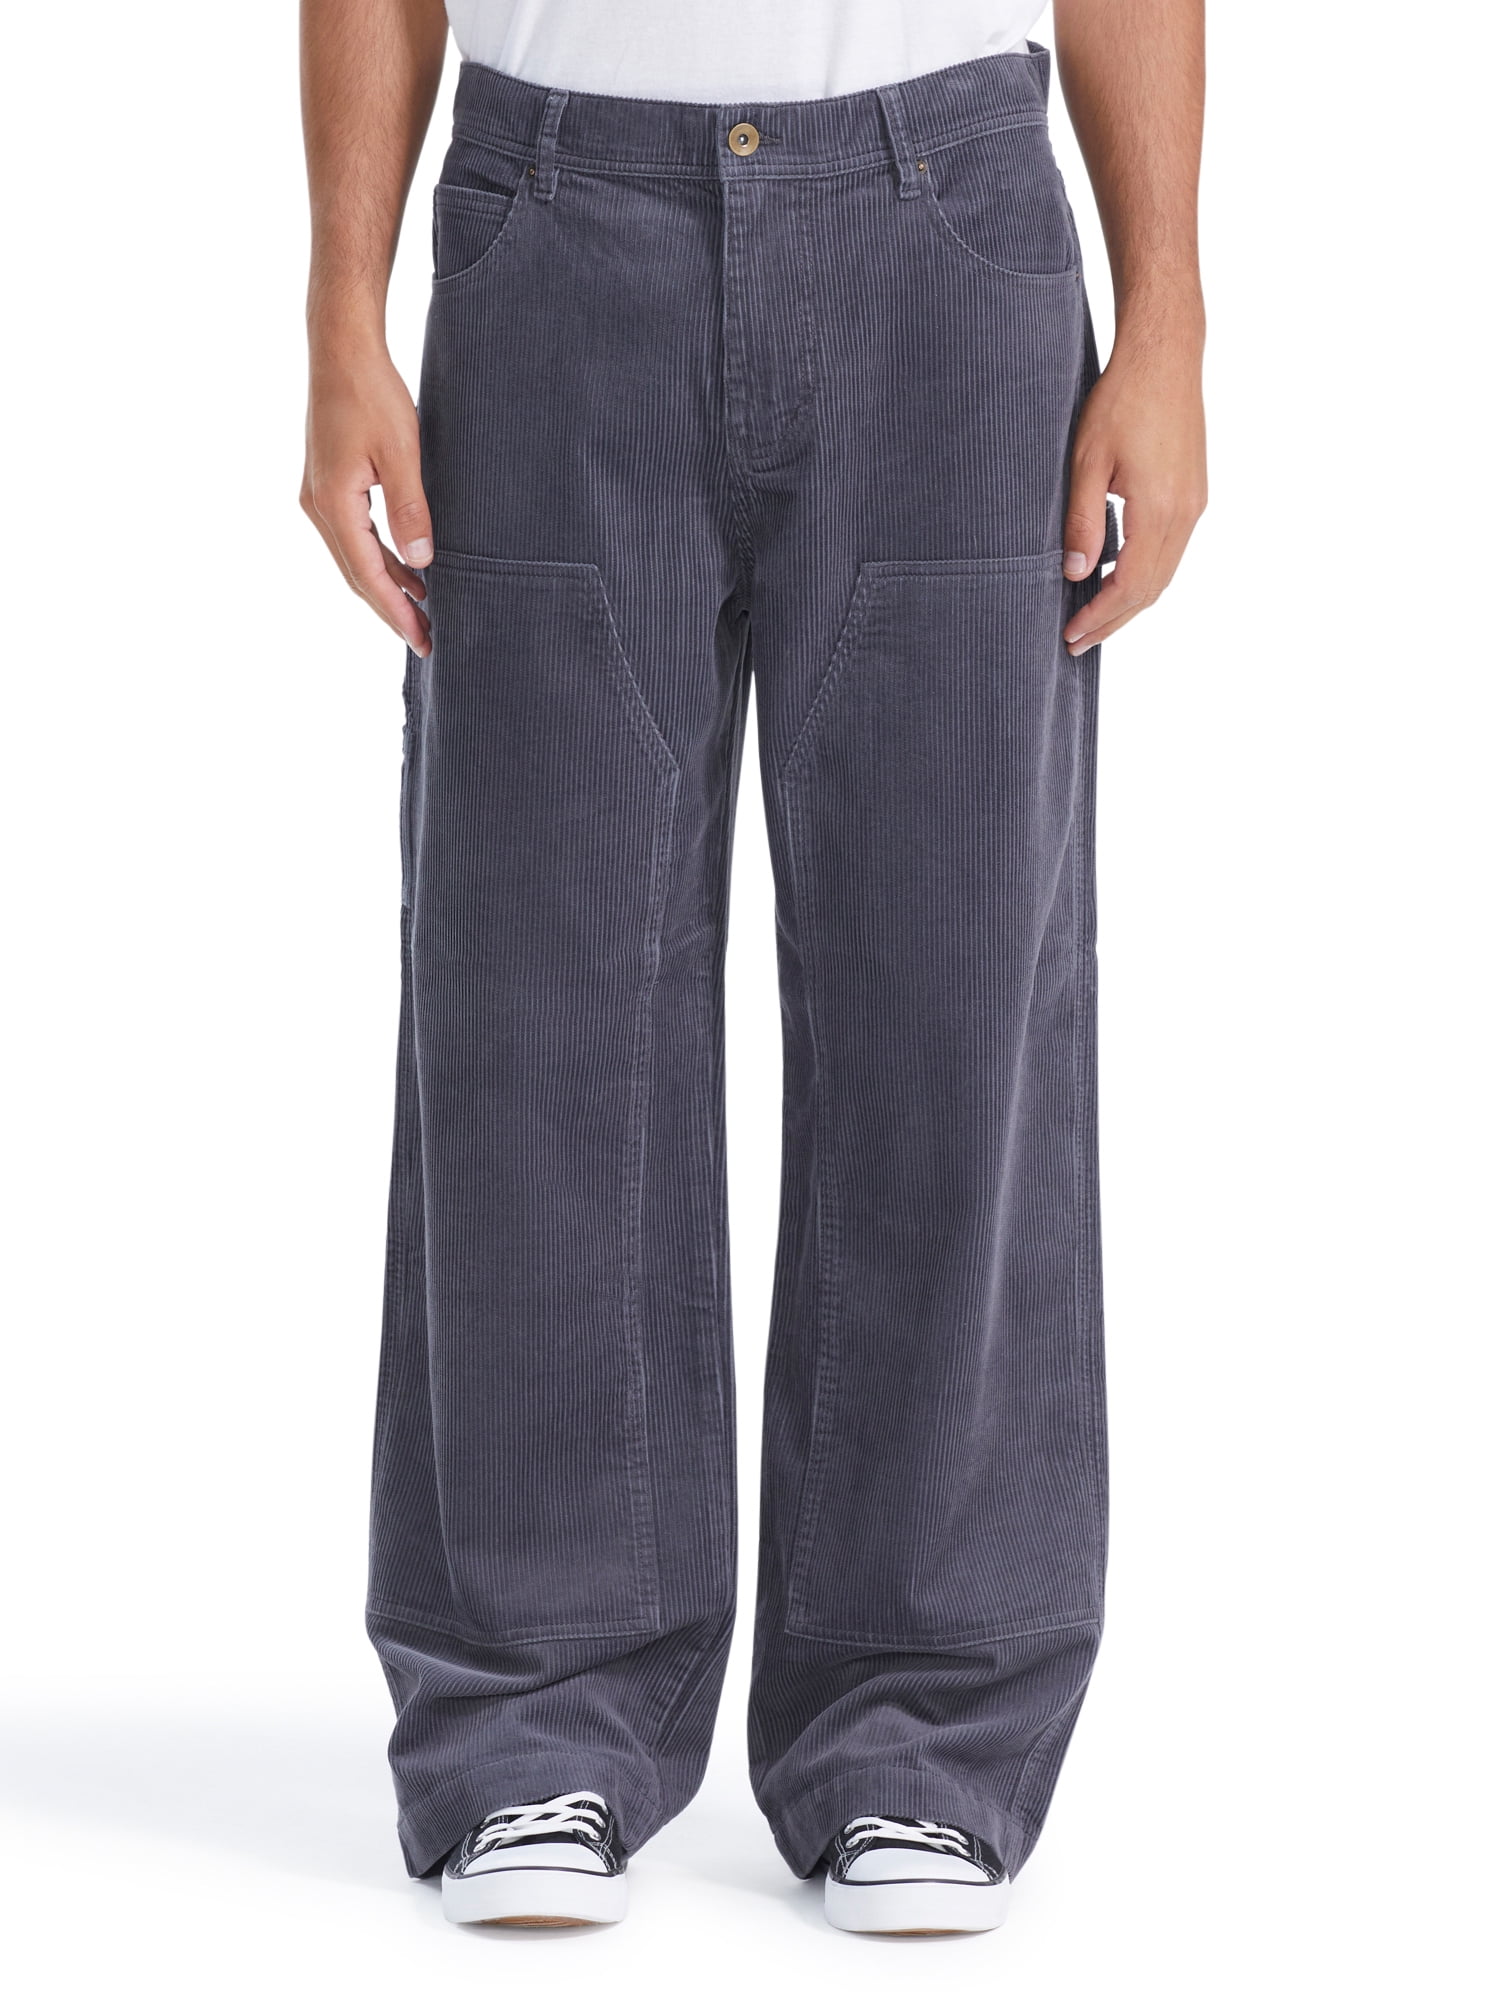 No Boundaries All Gender Carpenter Pants, Men's Size: 32x31